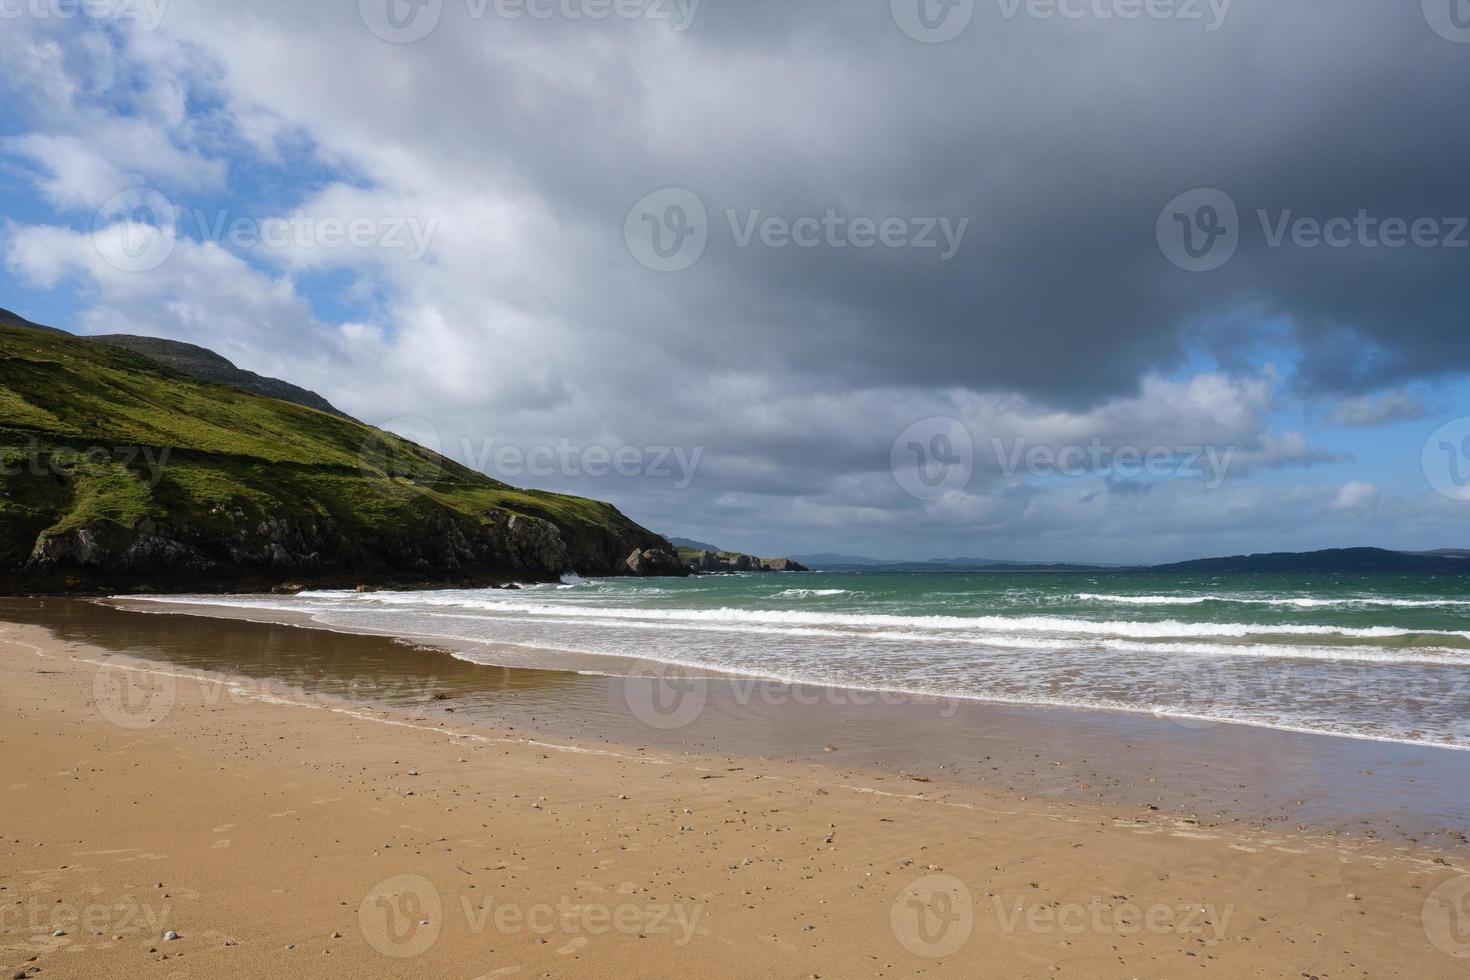 leenakeel baia spiaggia donegal Irlanda foto